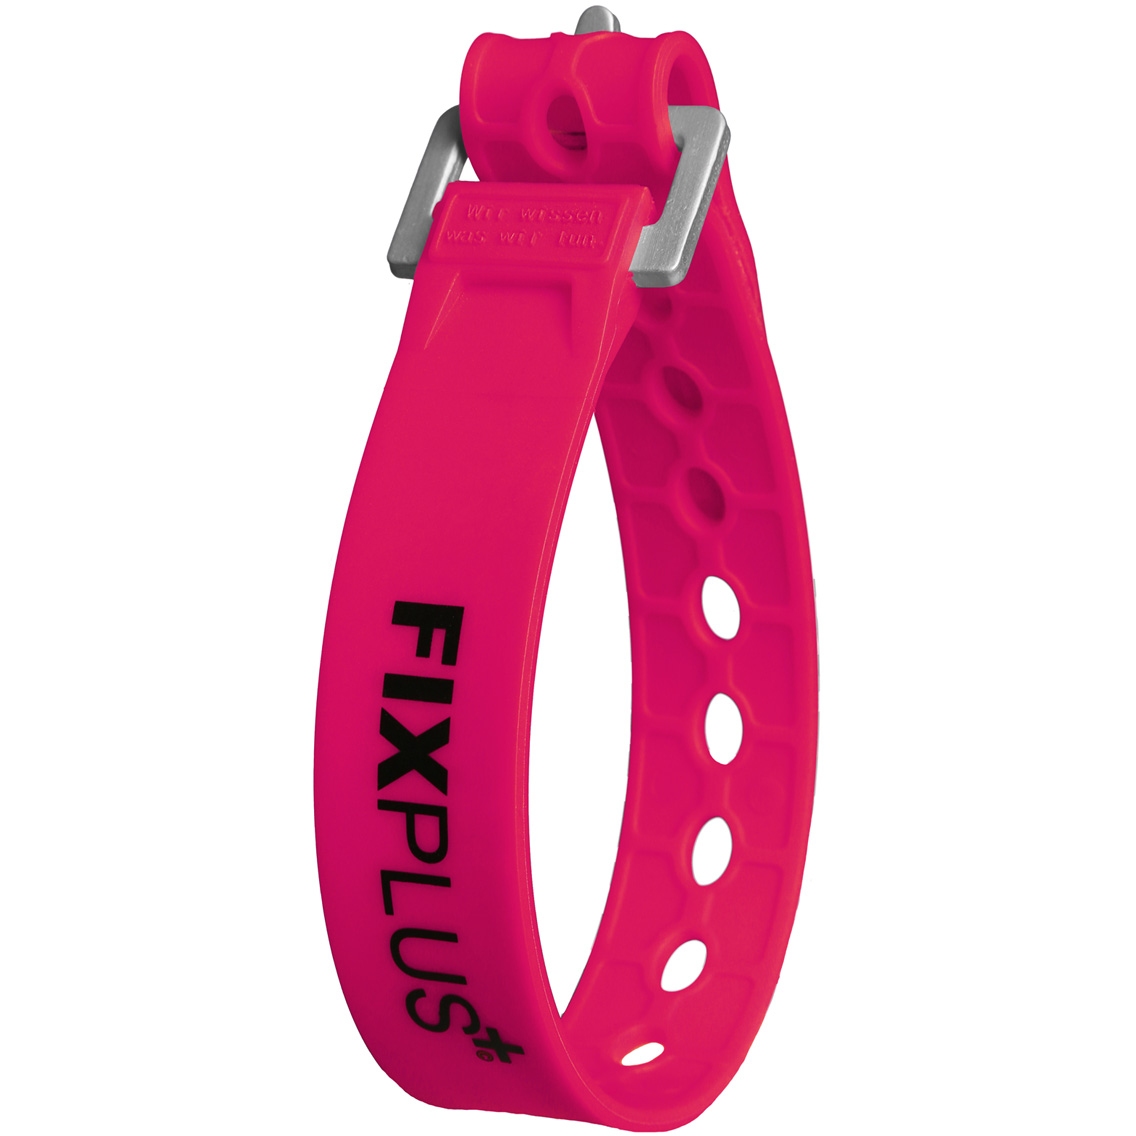 Productfoto van FixPlus Strap 35cm - pink